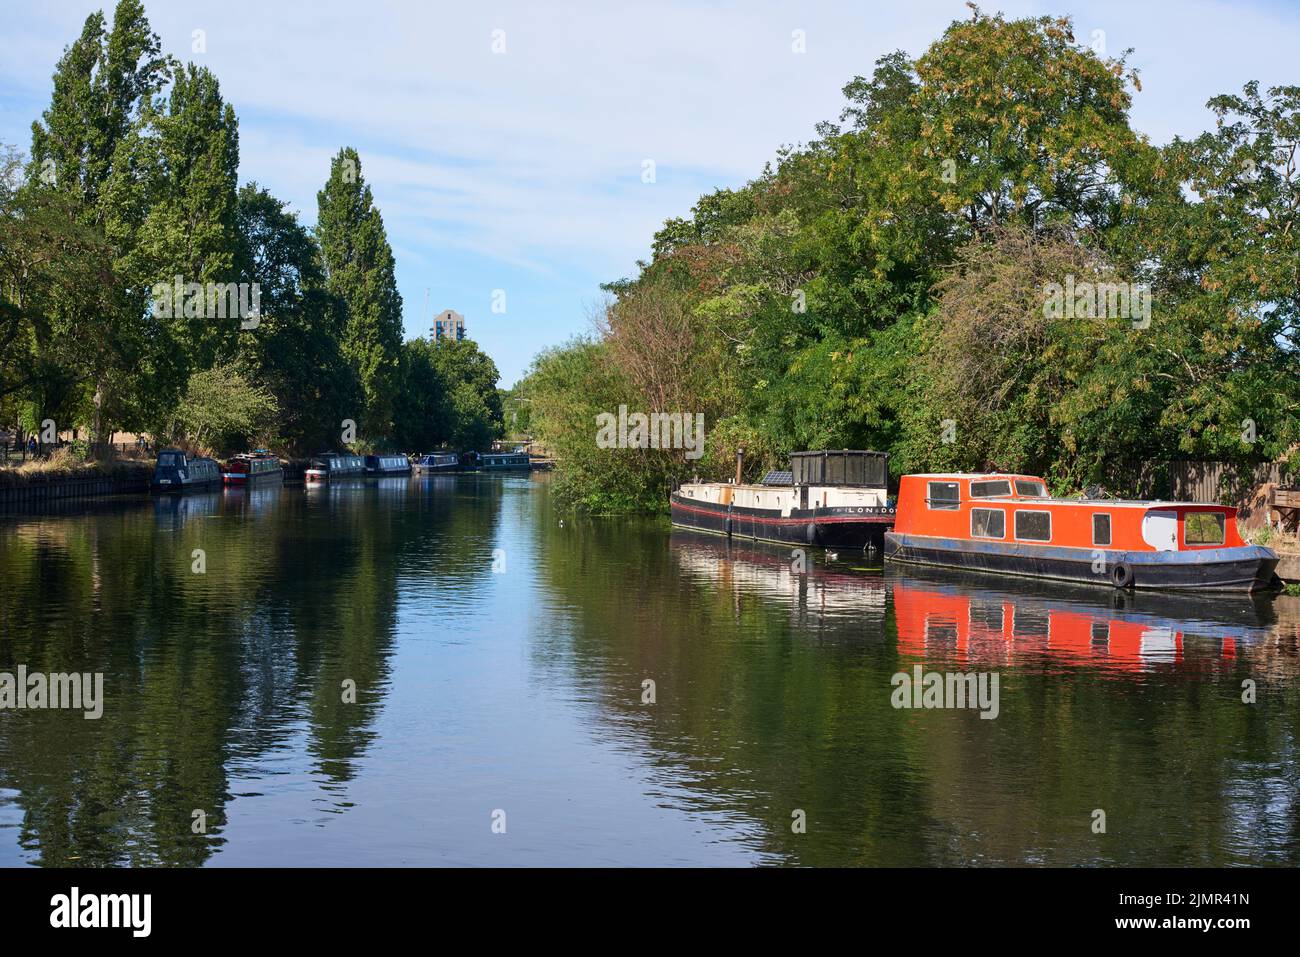 The River Lea near Markfield Park, South Tottenham, London UK, in summer Stock Photo